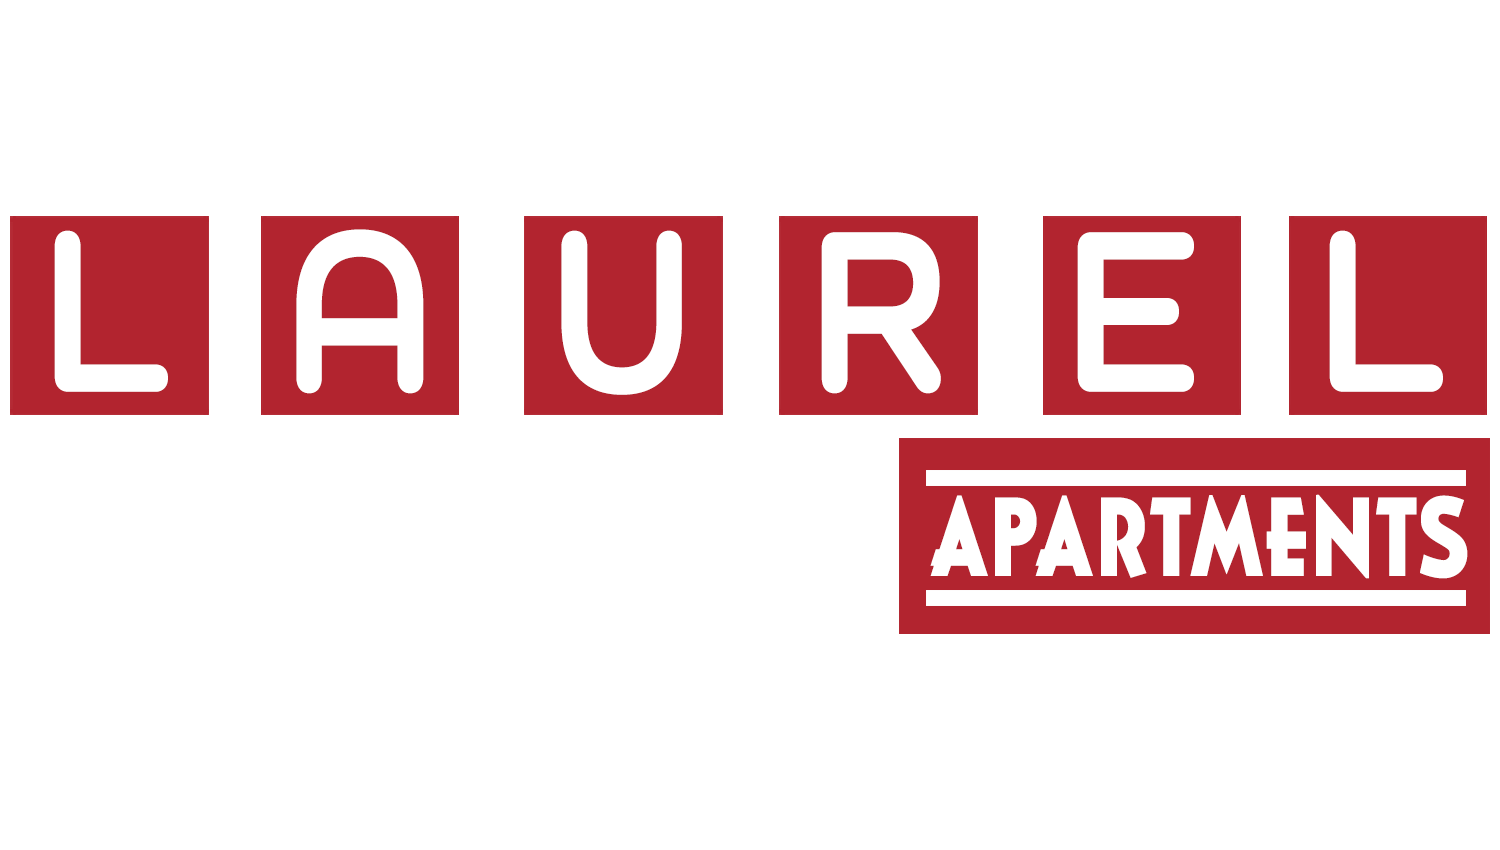 The Laurel Apartments